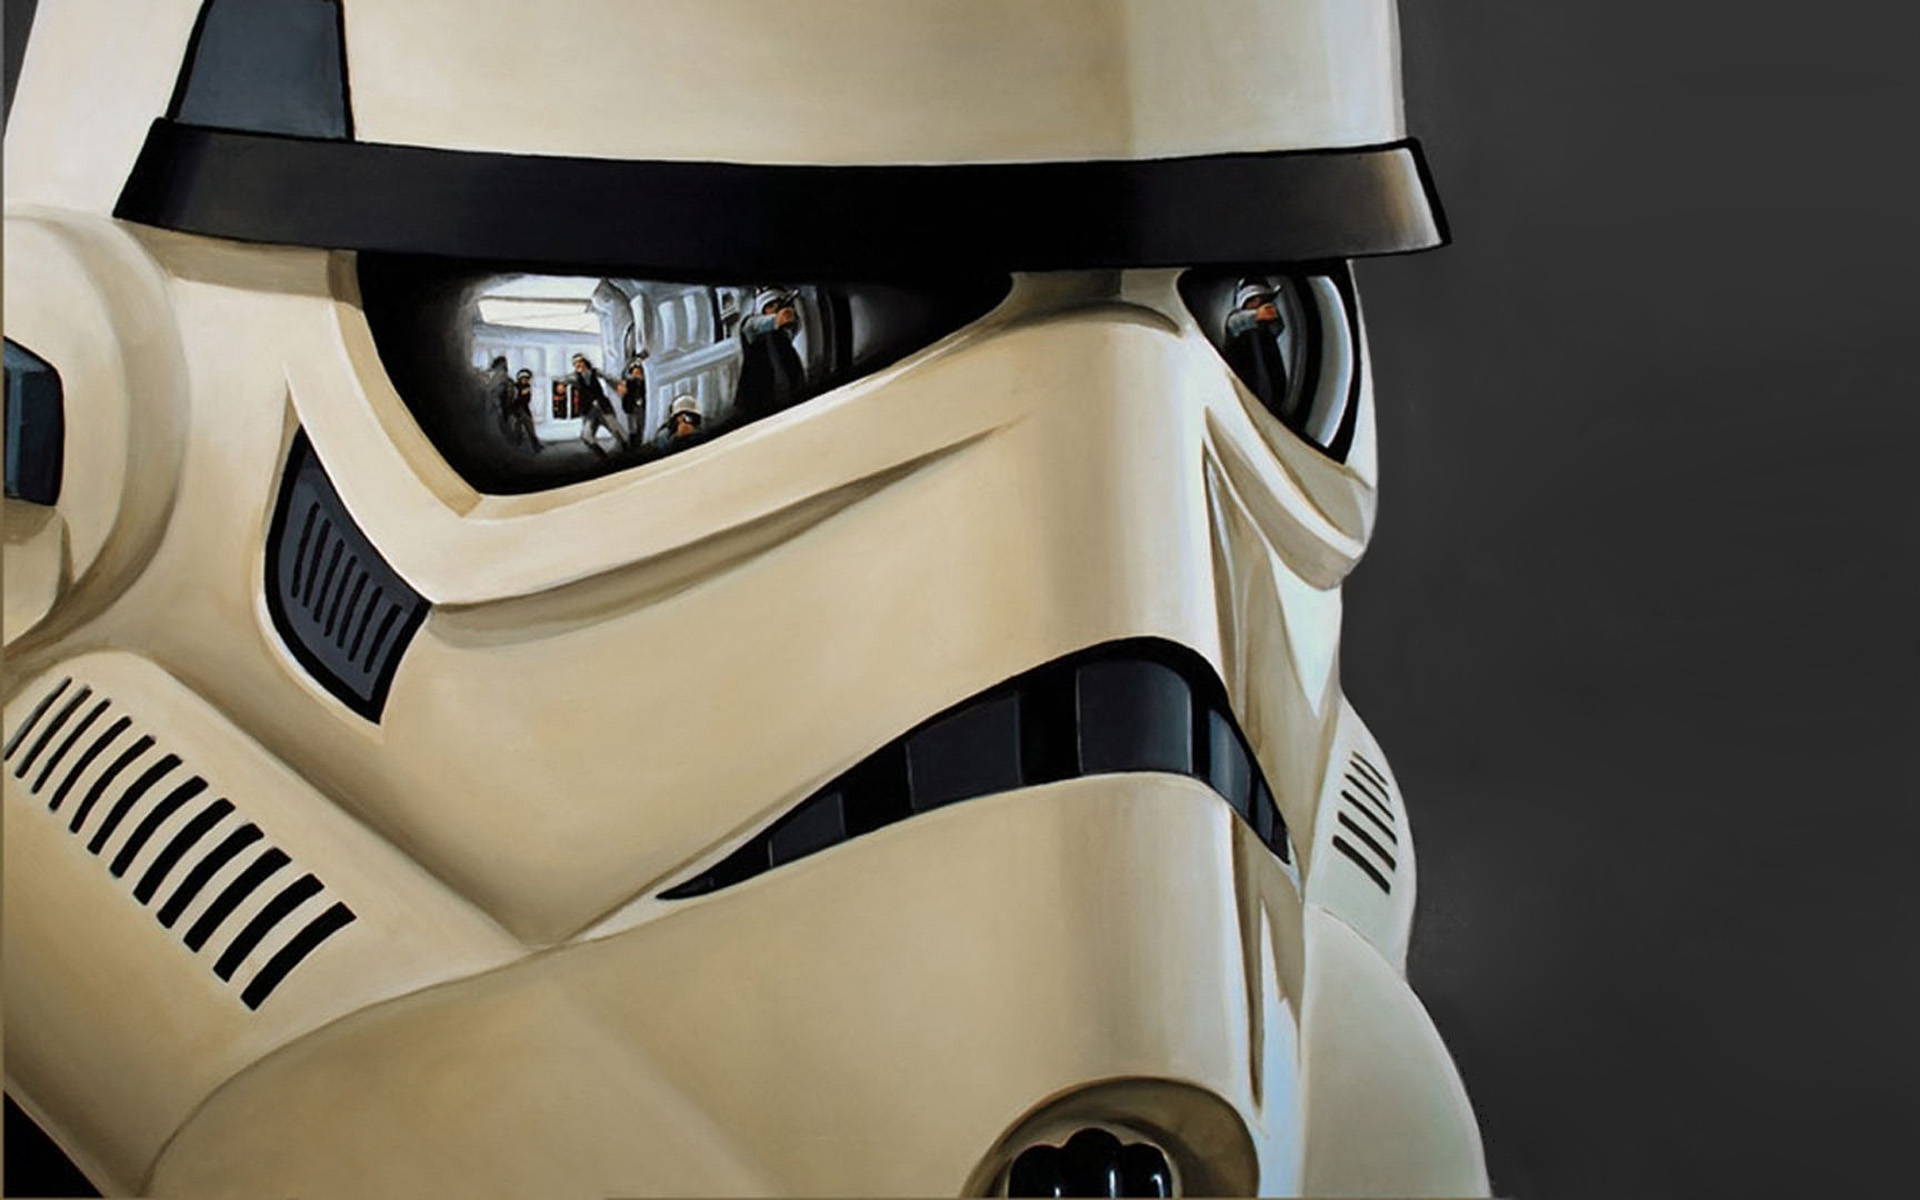 Empire Stormtroopers Star Wars HD Wallpaper Car